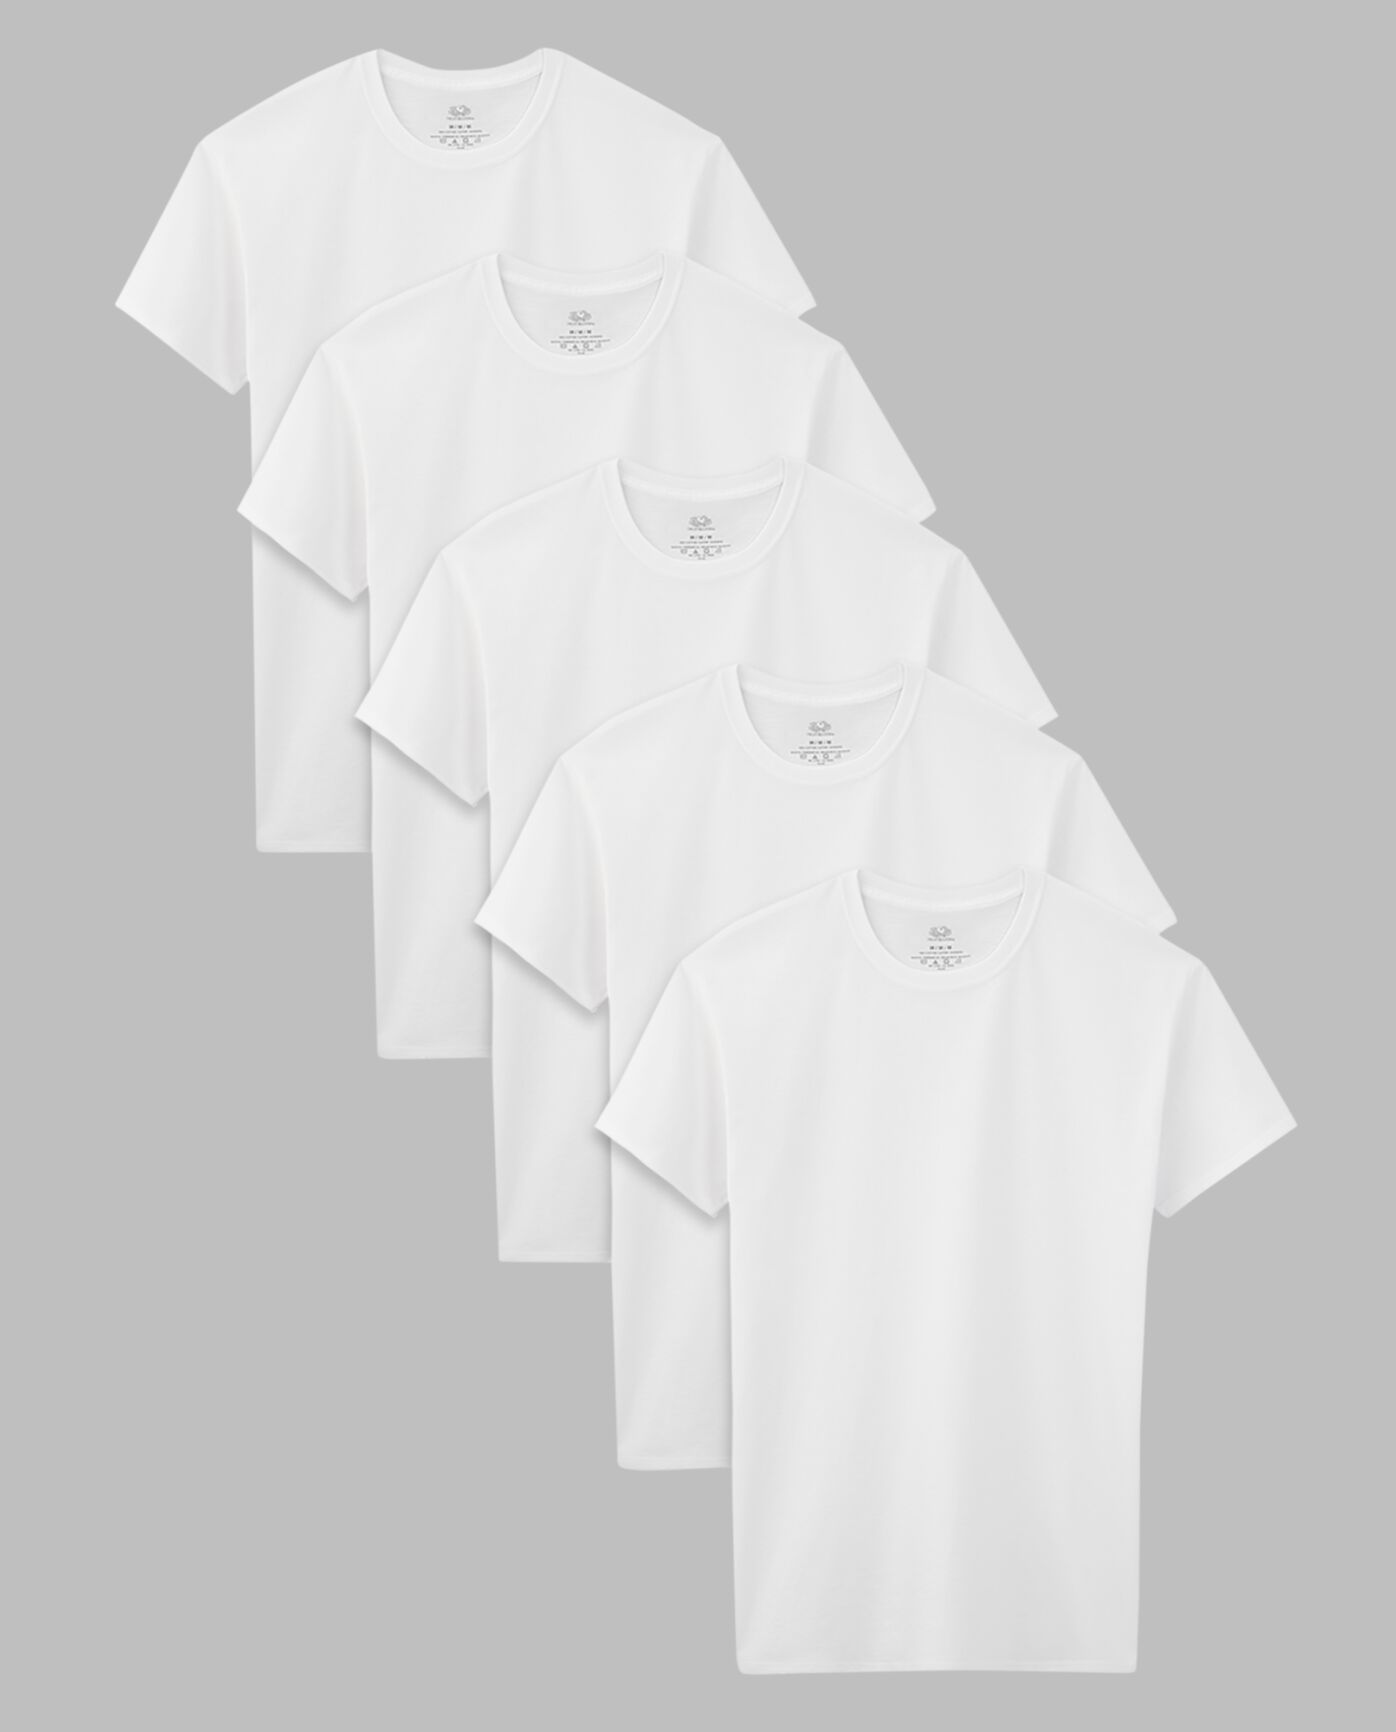 White Crew Neck T-Shirts, Pack | Fruit Loom